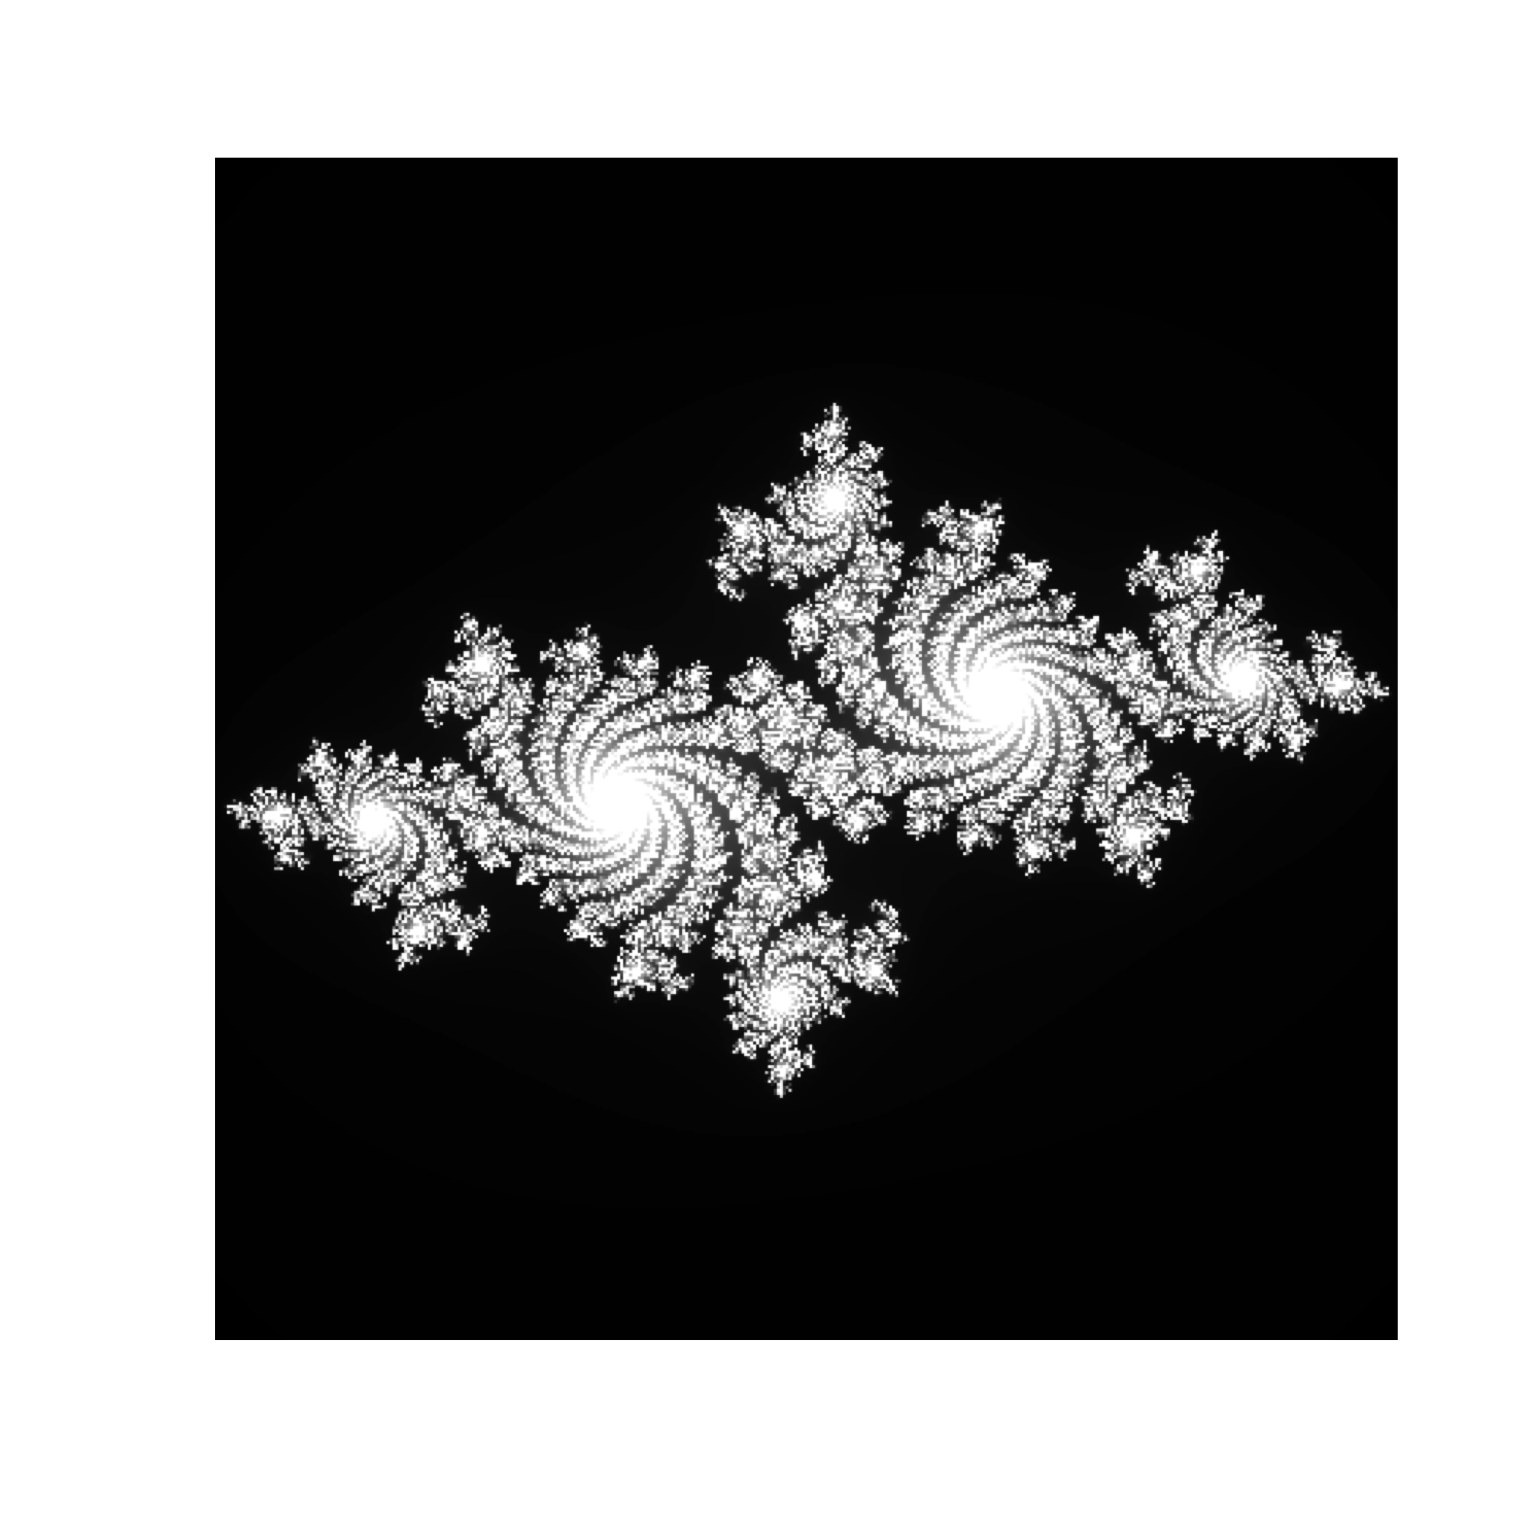 Introducing 'frak' - a julia set fractal generator - coolbutuseless